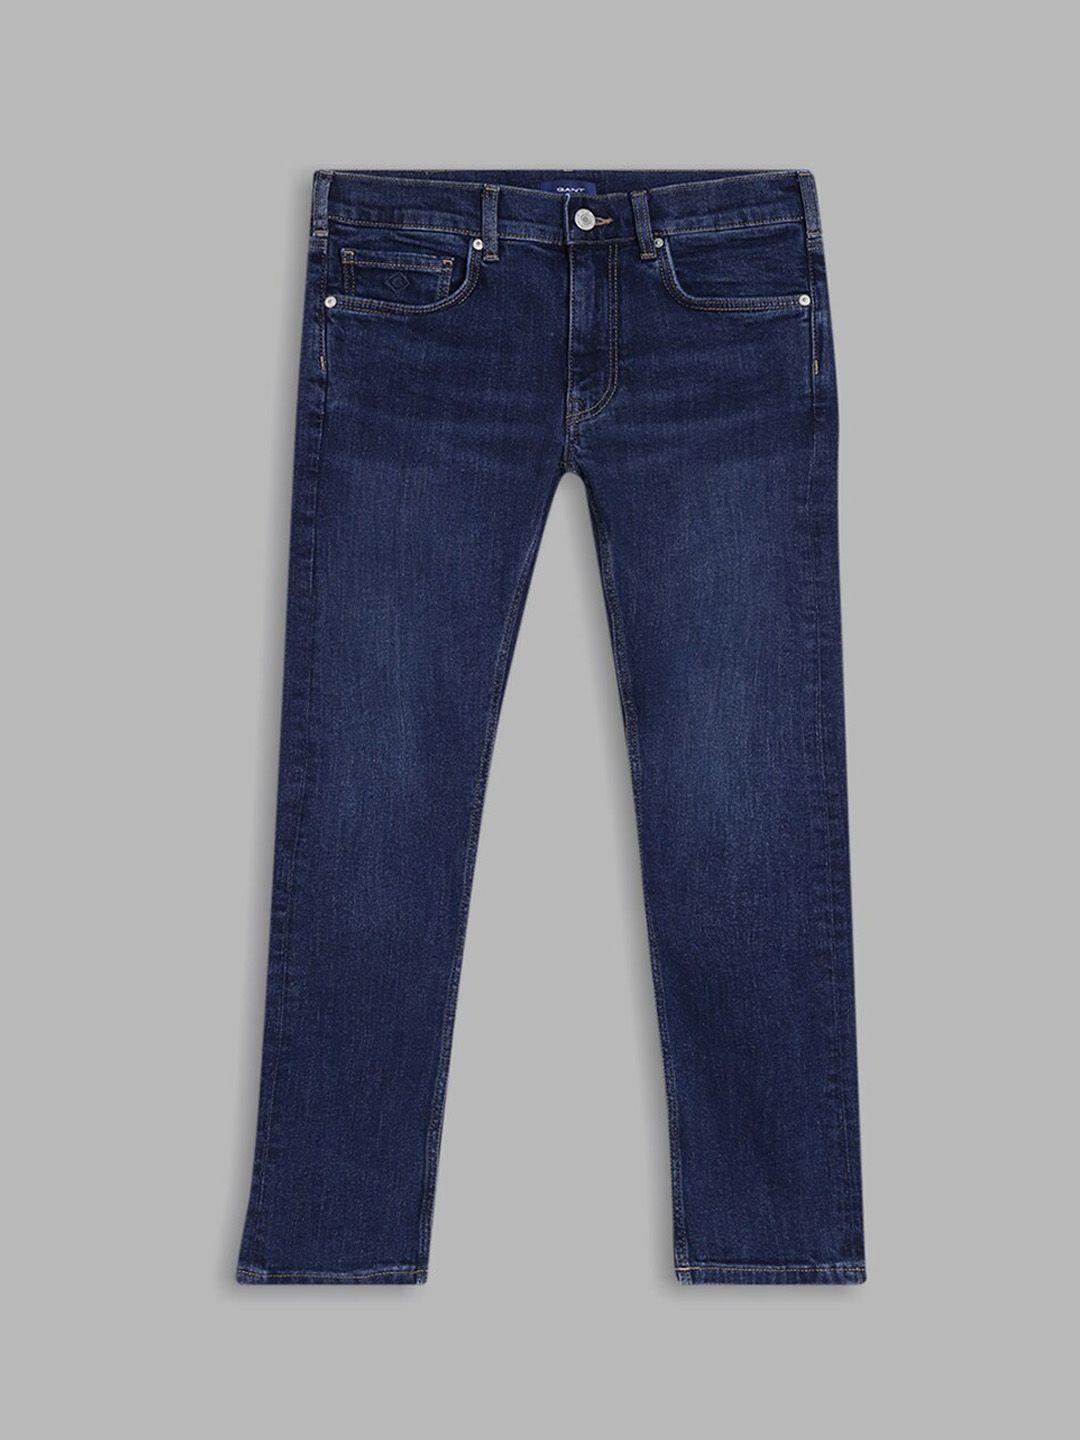 gant-boys-navy-blue-slim-fit-light-fade-cotton-jeans